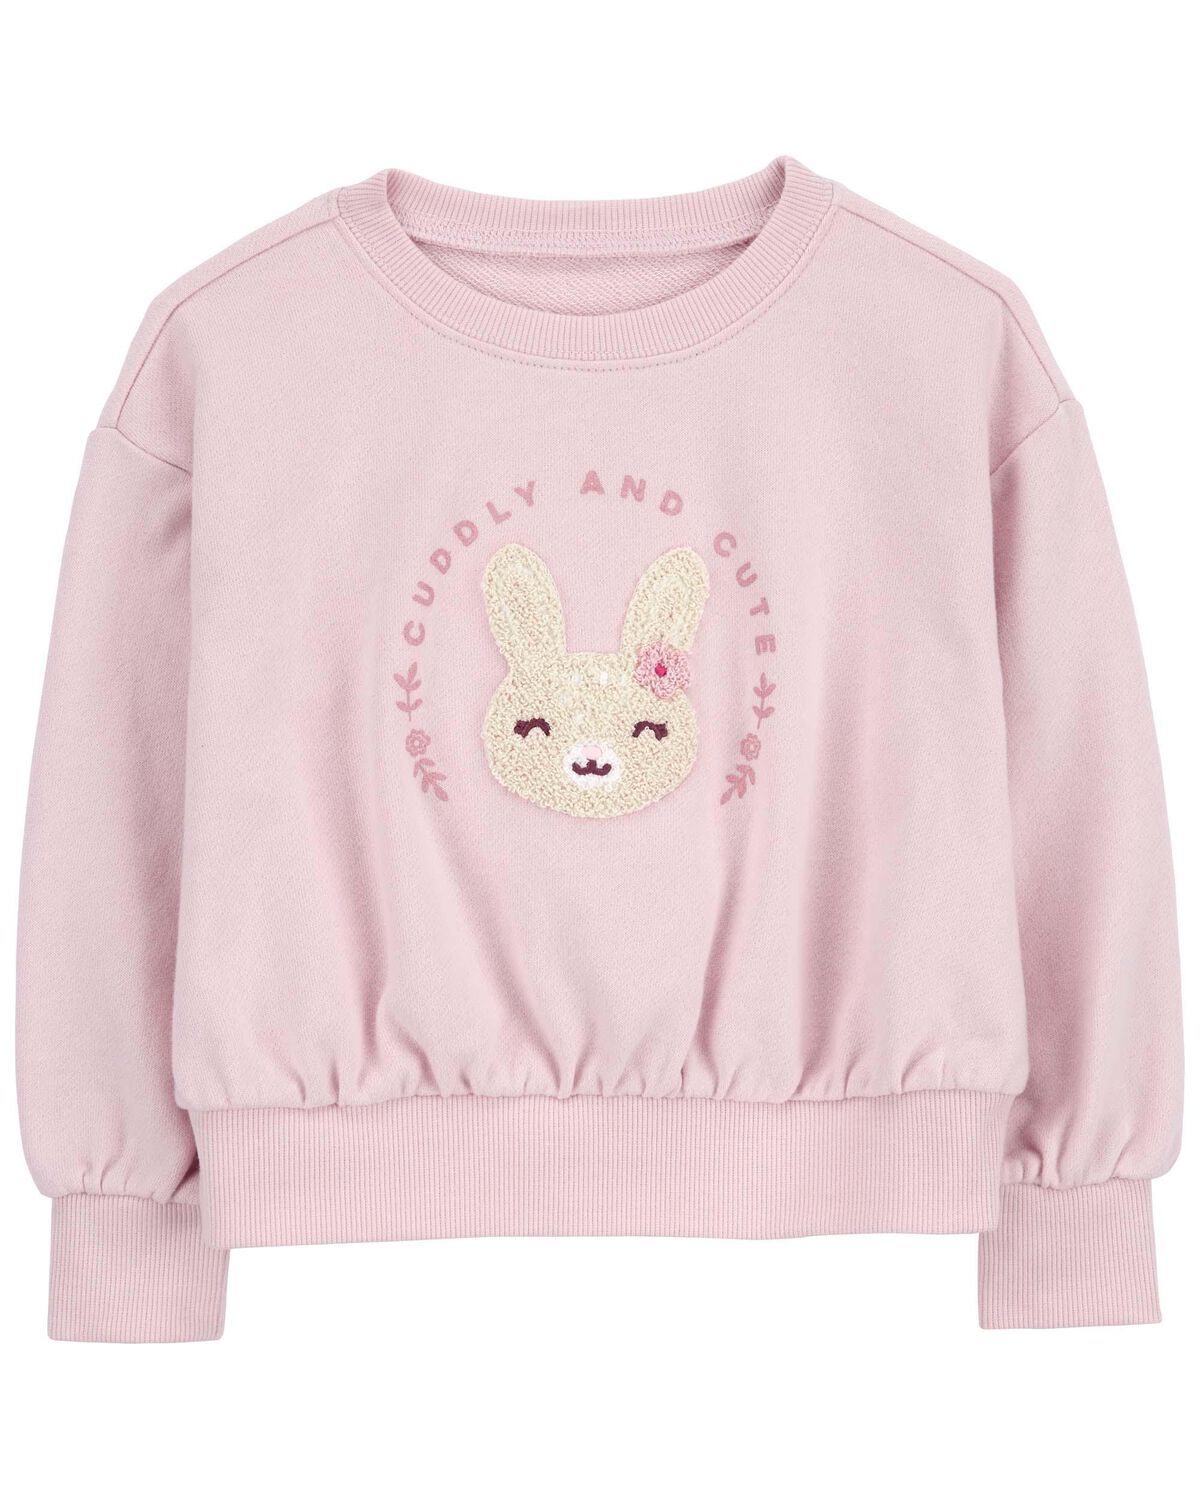 Pink Toddler Bunny Pullover Sweatshirt | carters.com | Carter's